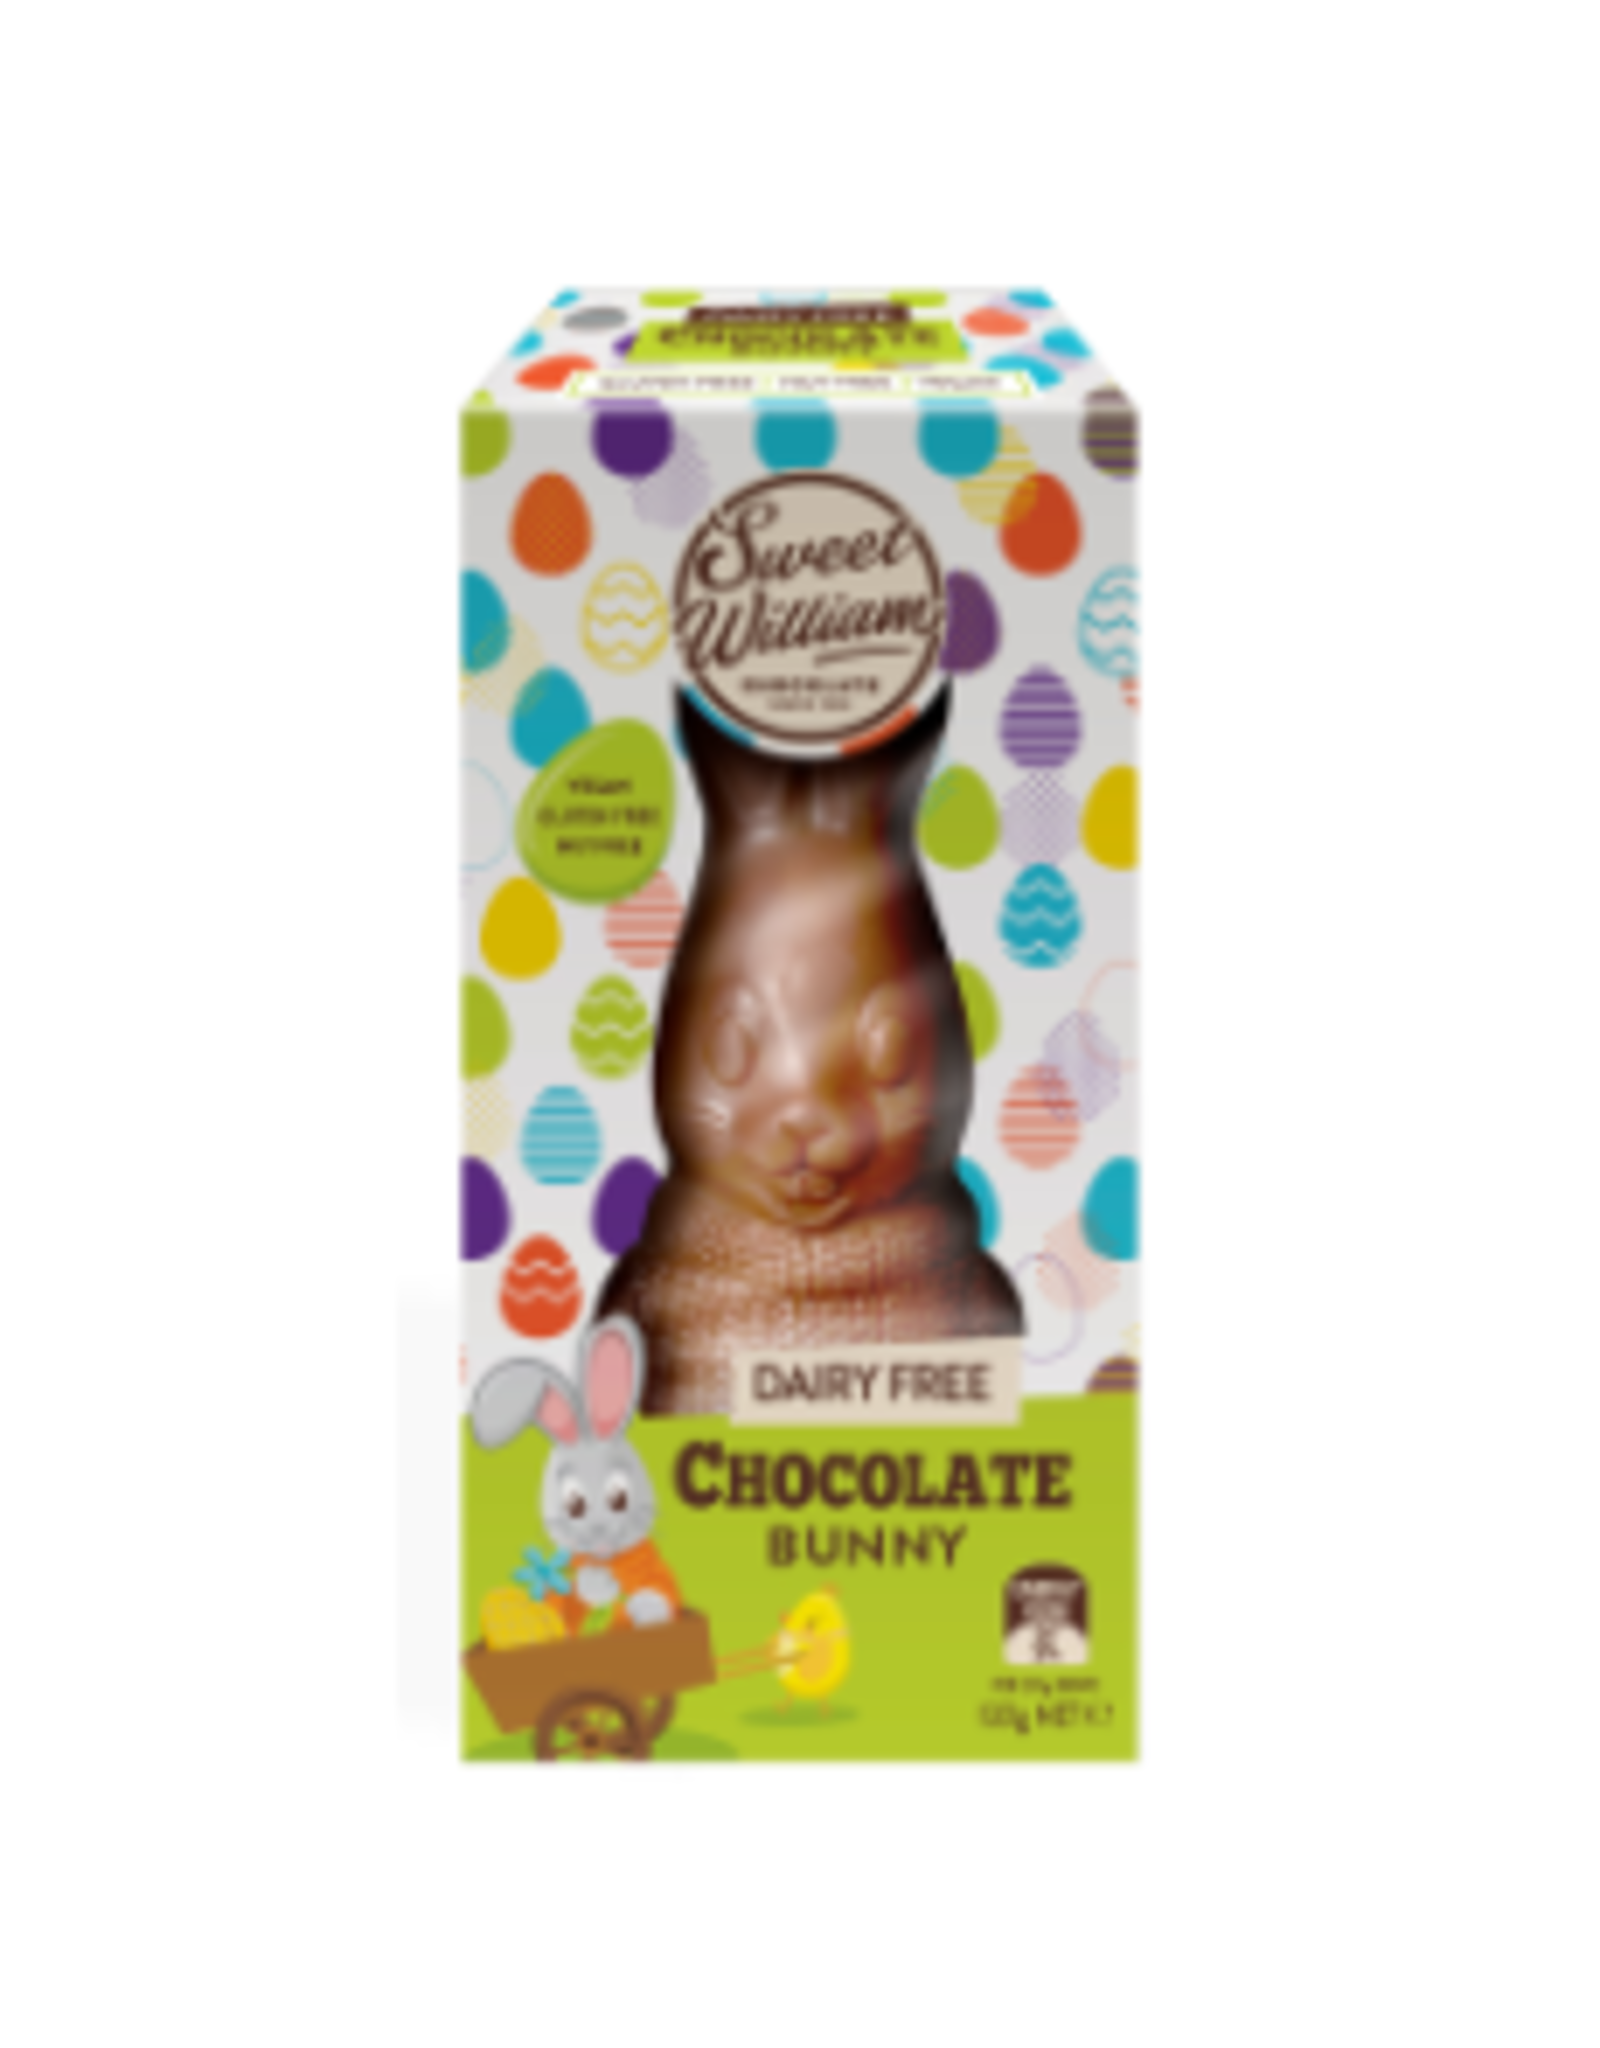 Sweet William Hollow Chocolate Bunny 120g